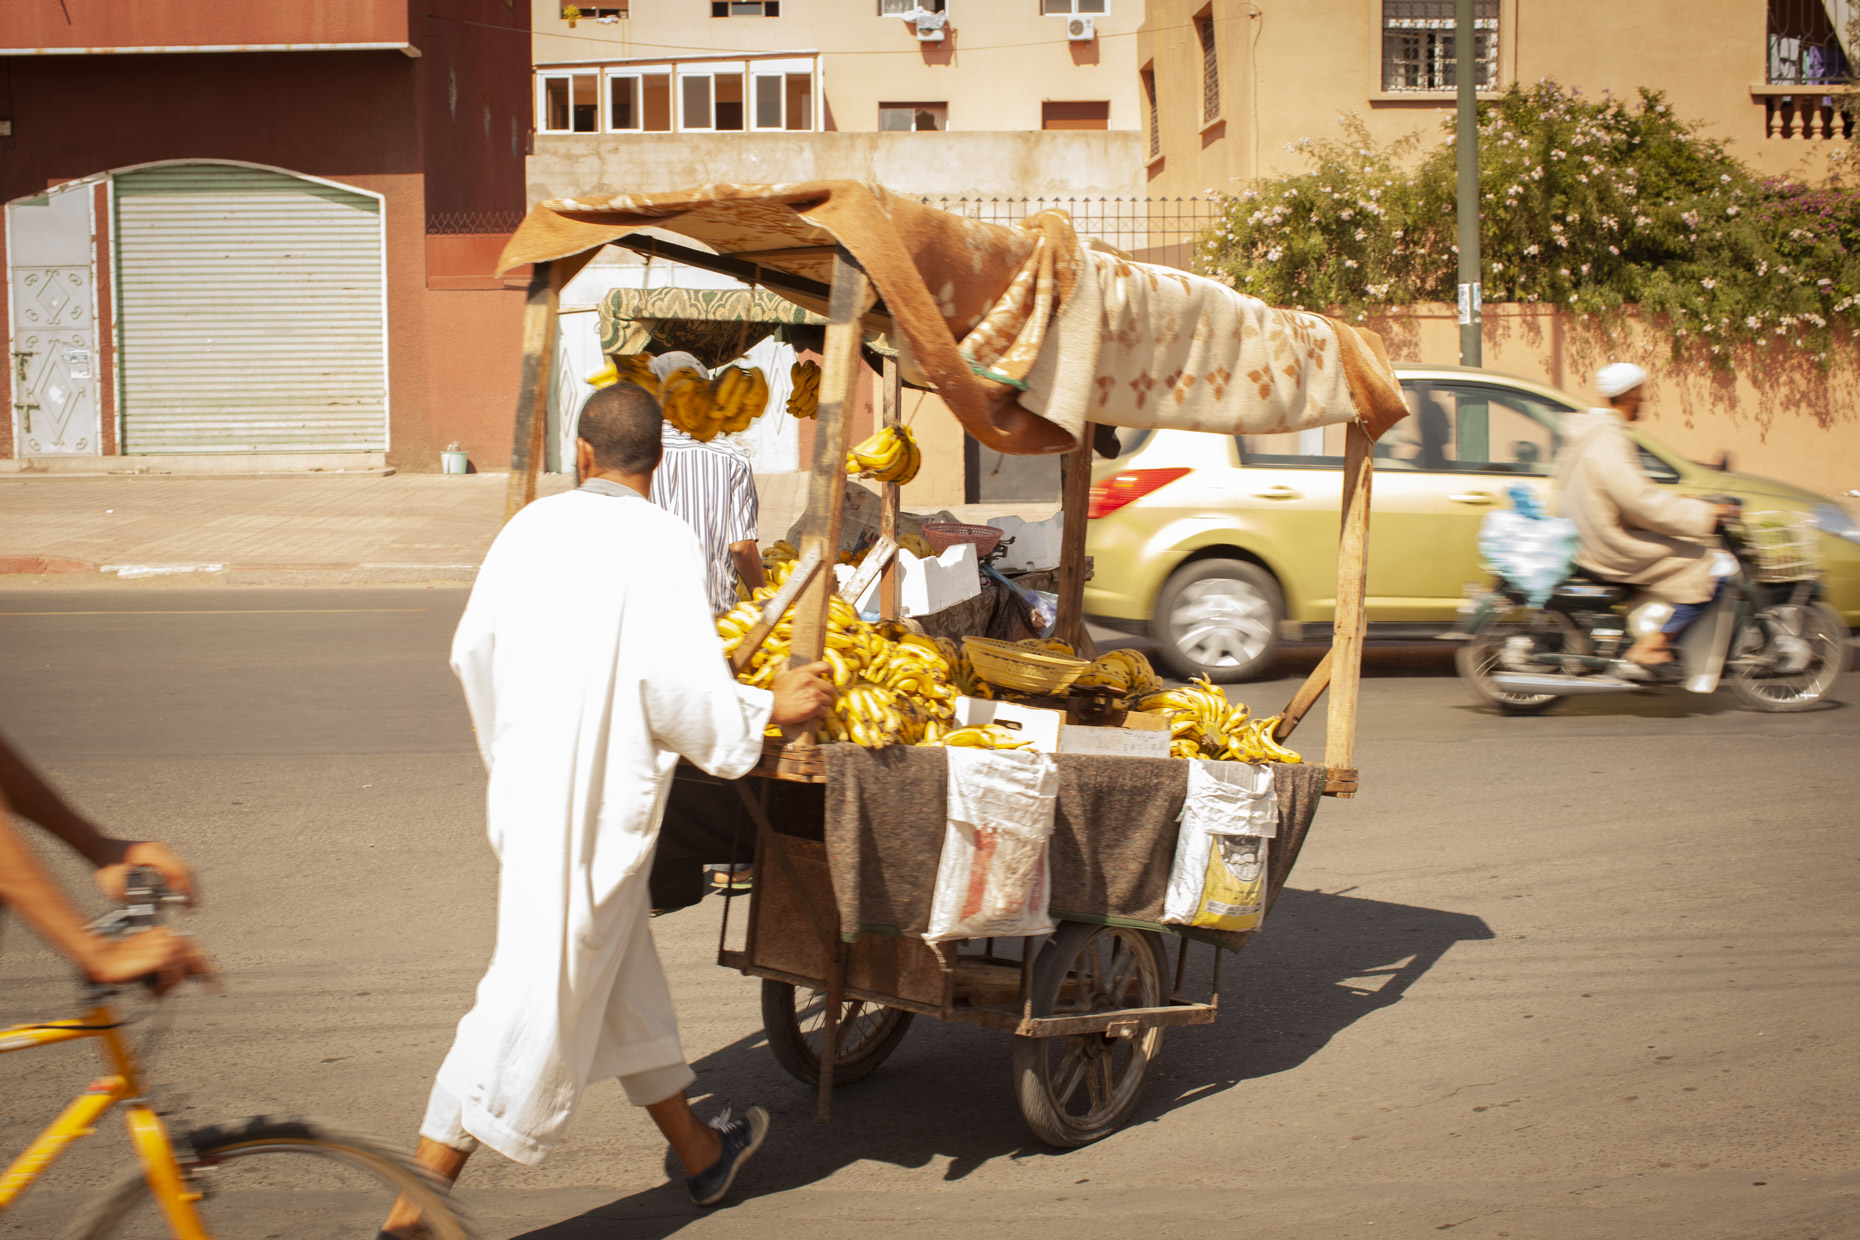 Man wheeling cart of bananas down the street in Marrakesh, Morocco